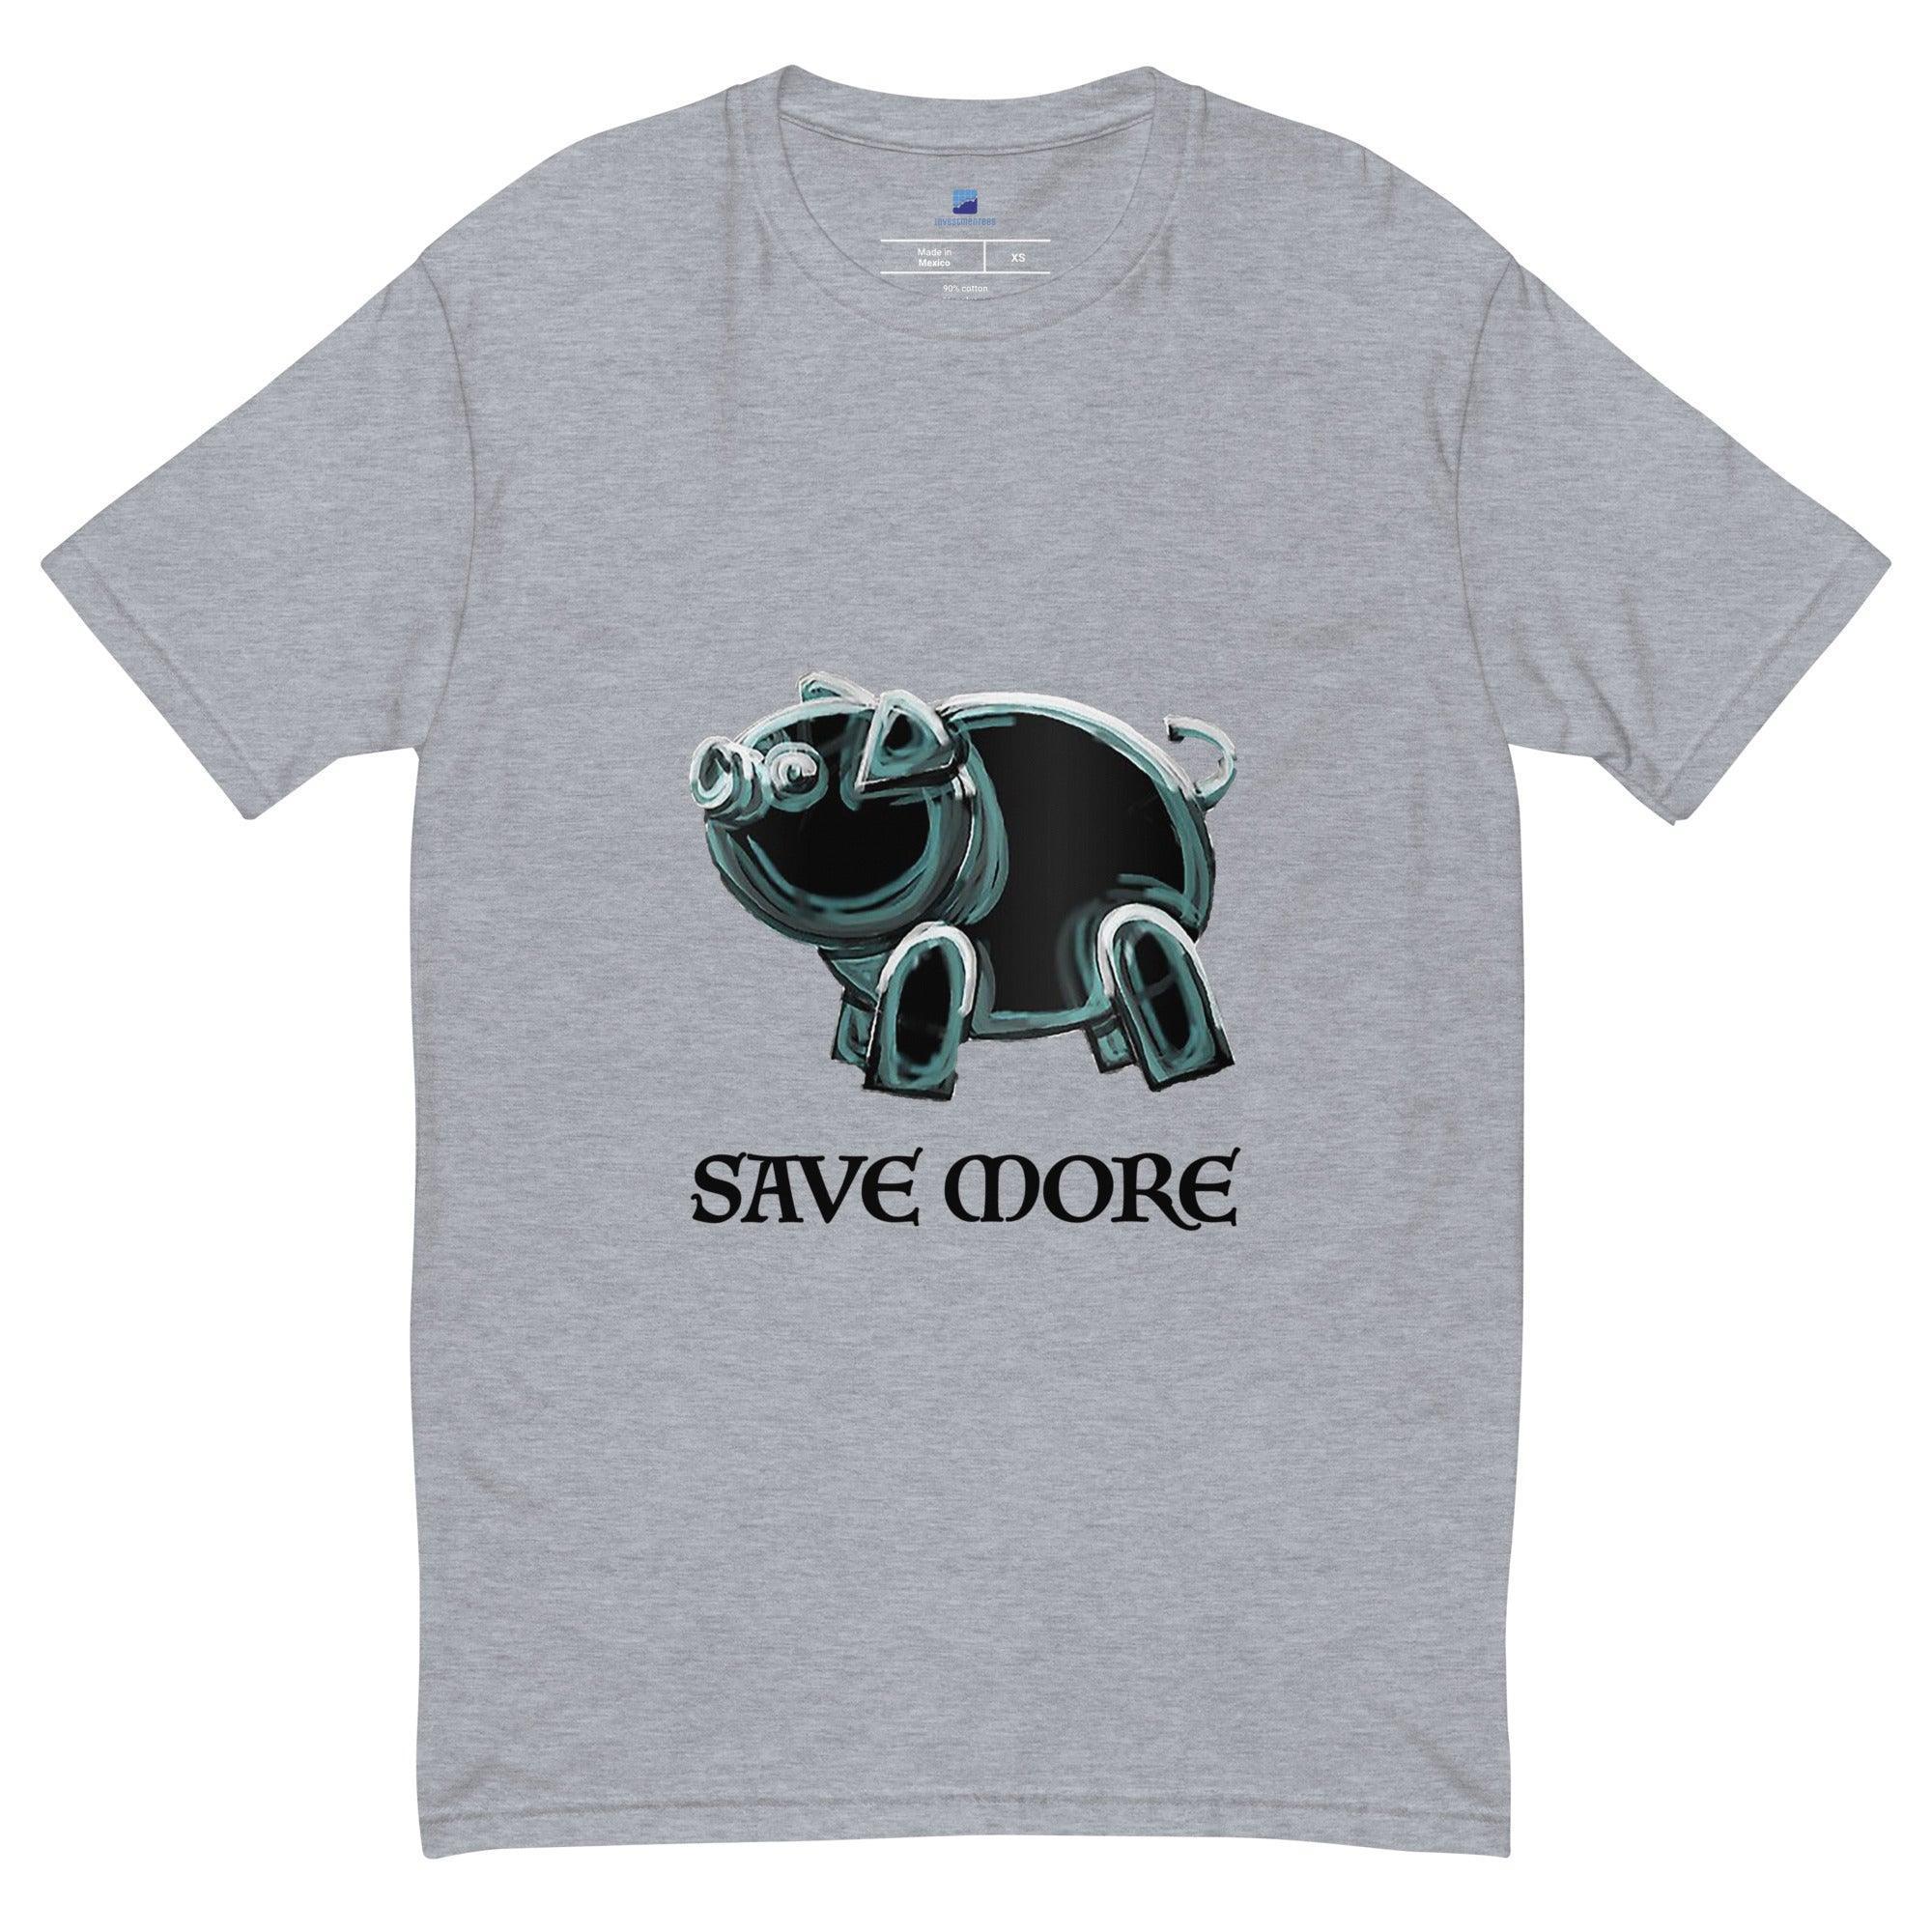 Save More Piggy Bank T-Shirt - InvestmenTees